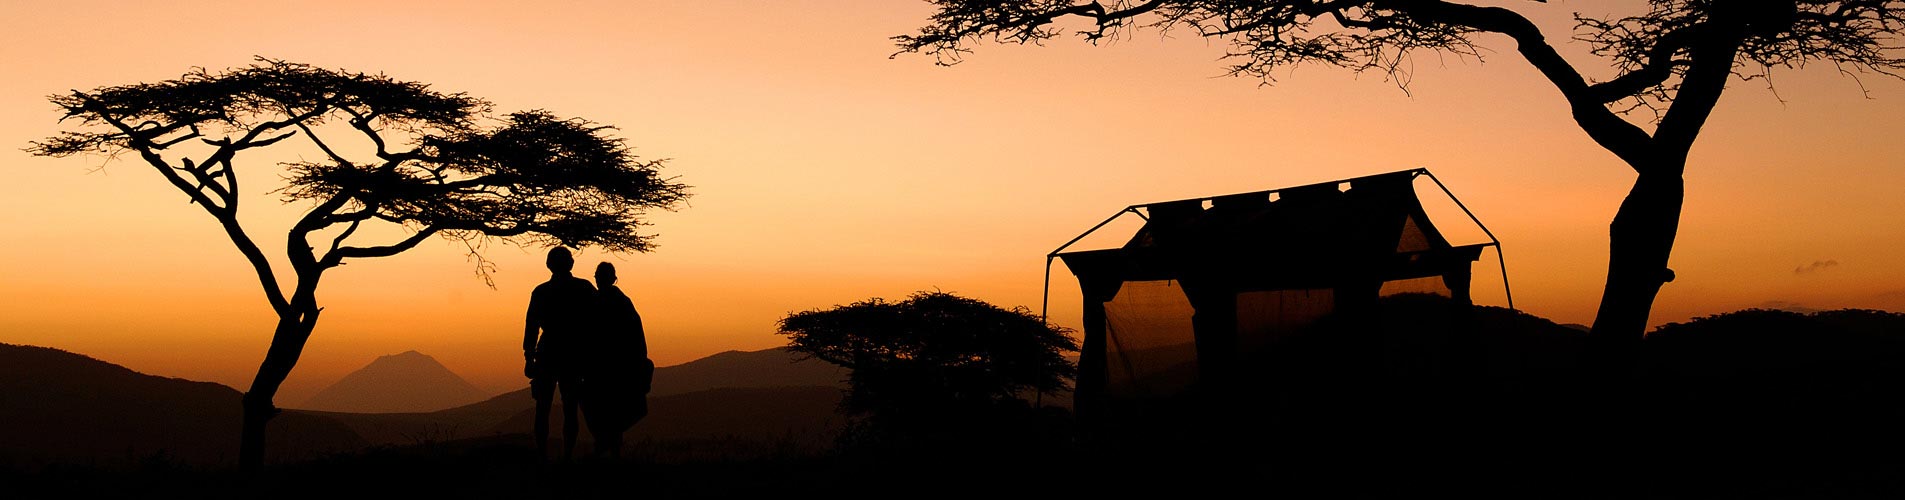 Tanzania Safari Olivers Camp Flycamping sunrise